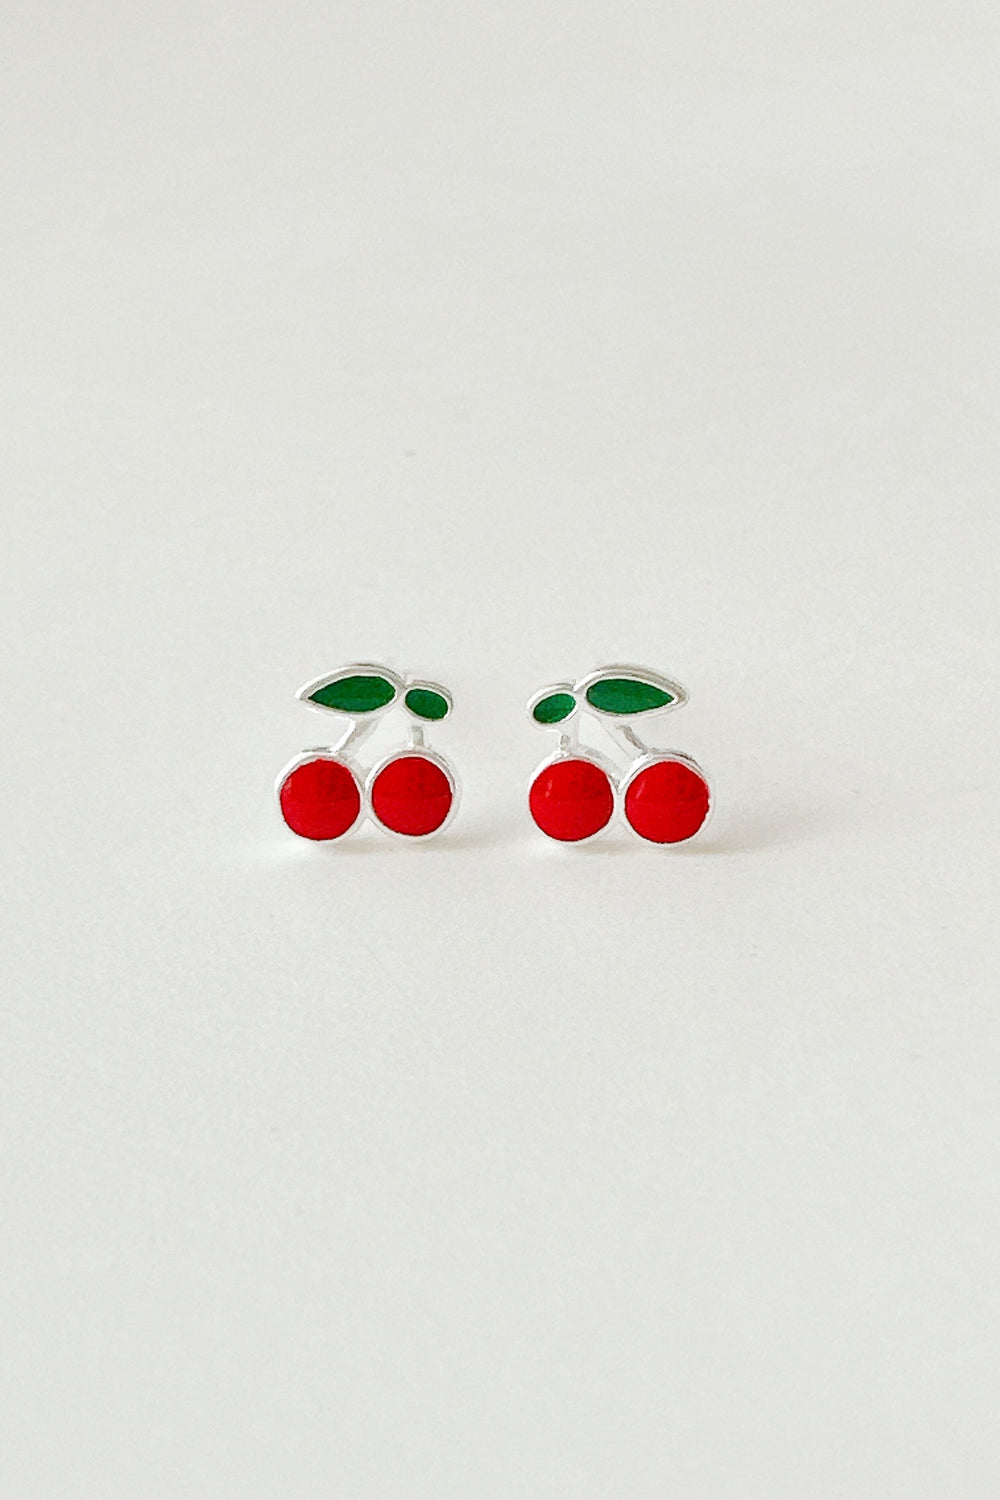 23511 - Red Cherry Earrings